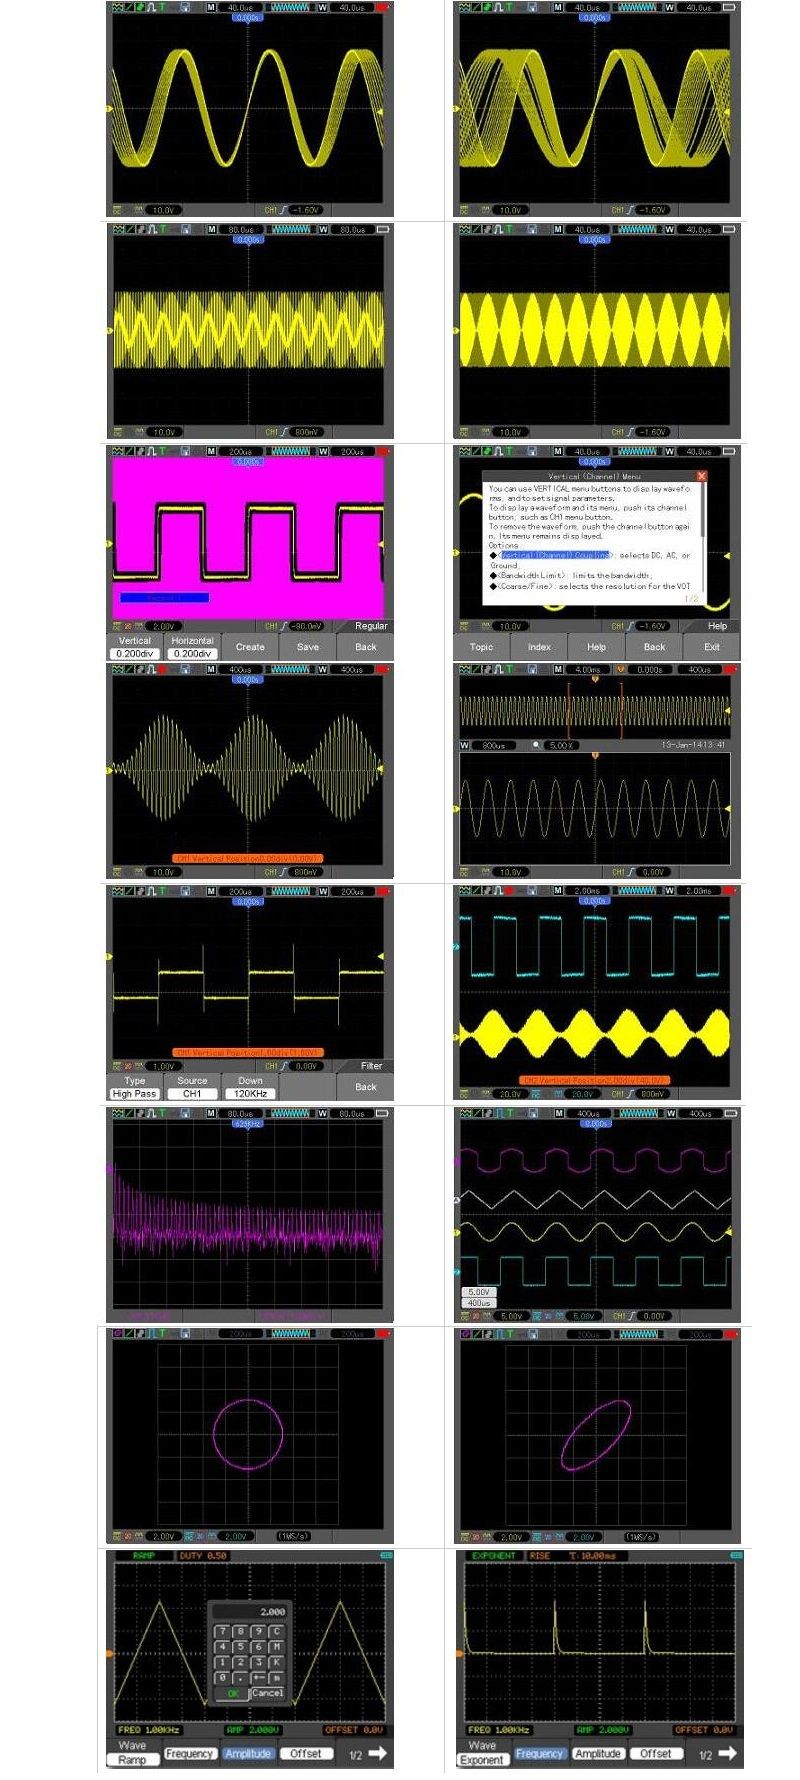 Hantek-DSO8202E-Oscilloscope-1GSas-Sample-Rate-Large-56-inch-TFT-Color-LCD-Display-OscilloscopeRecor-1369923